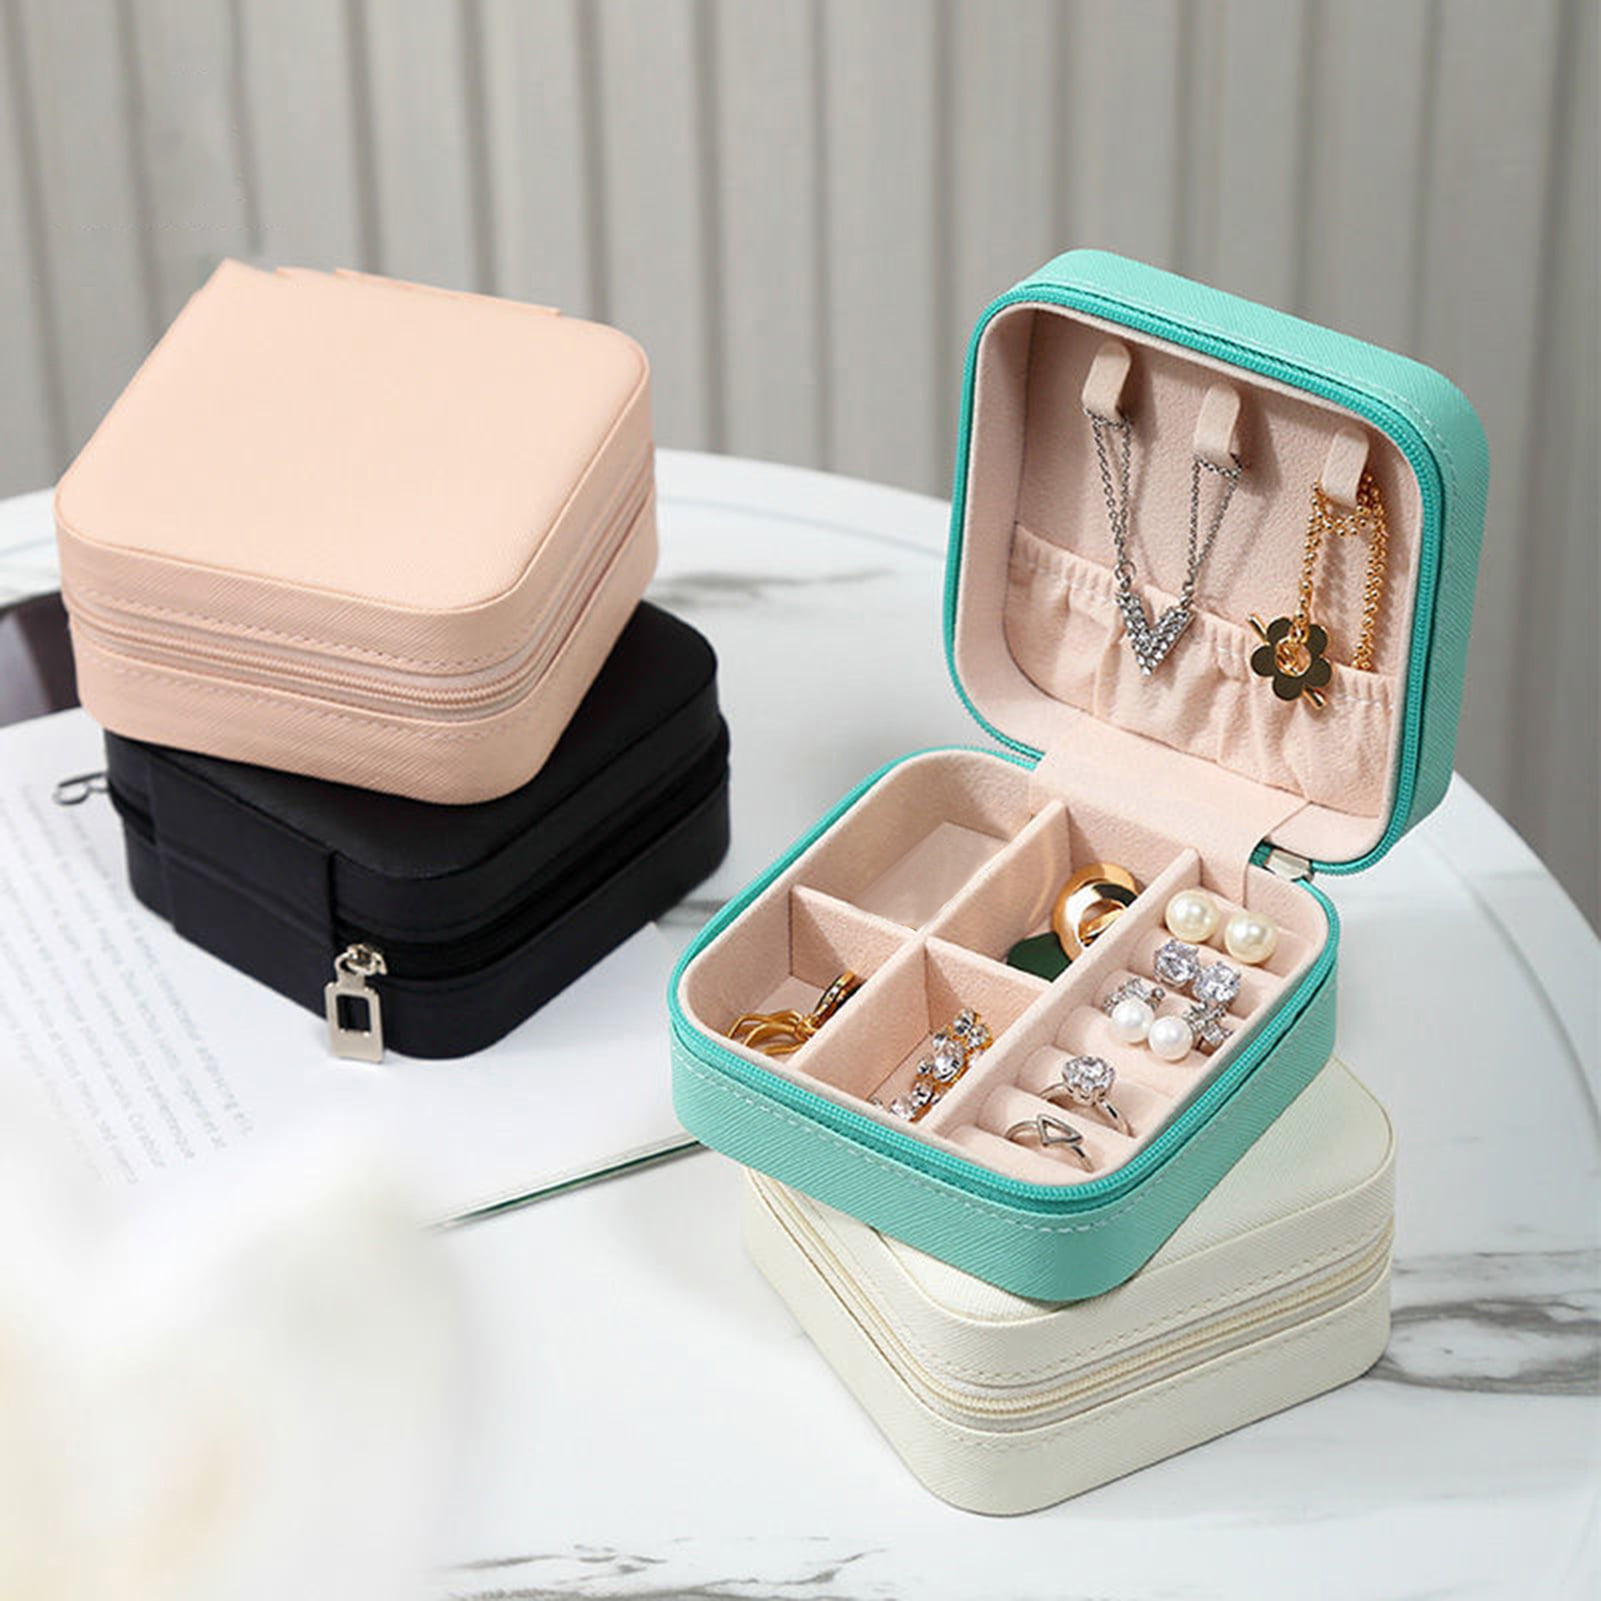 Travelwant Jewelry Organizer, Small Jewelry Box Earring Holder for Women, Jewelry Storage Box 4-Layer Rotatable Jewelry Accessory Storage Tray with